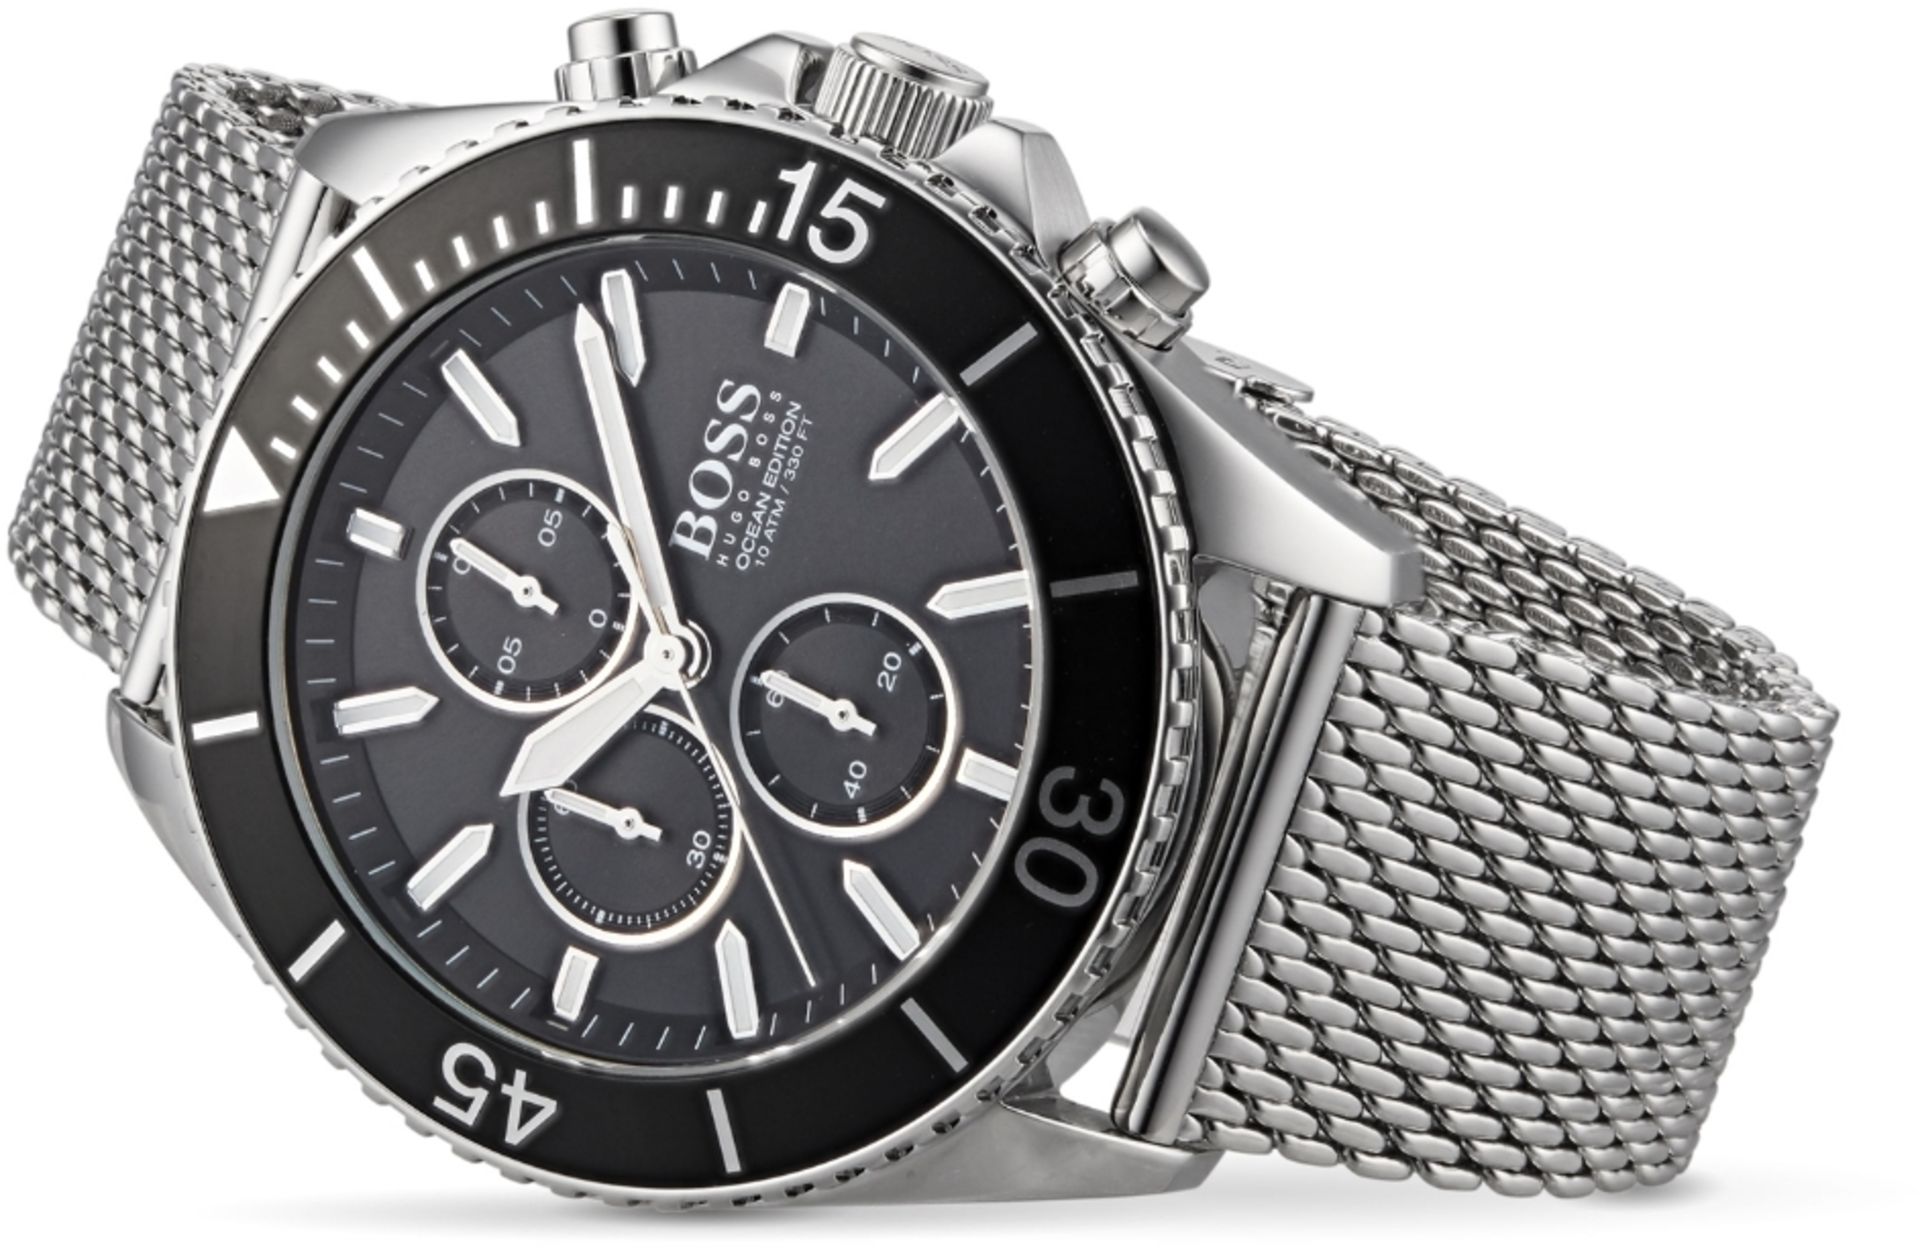 Hugo Boss 1513701 Men's Ocean Edition Silver Mesh Band Quartz Chronograph Watch - Image 6 of 6